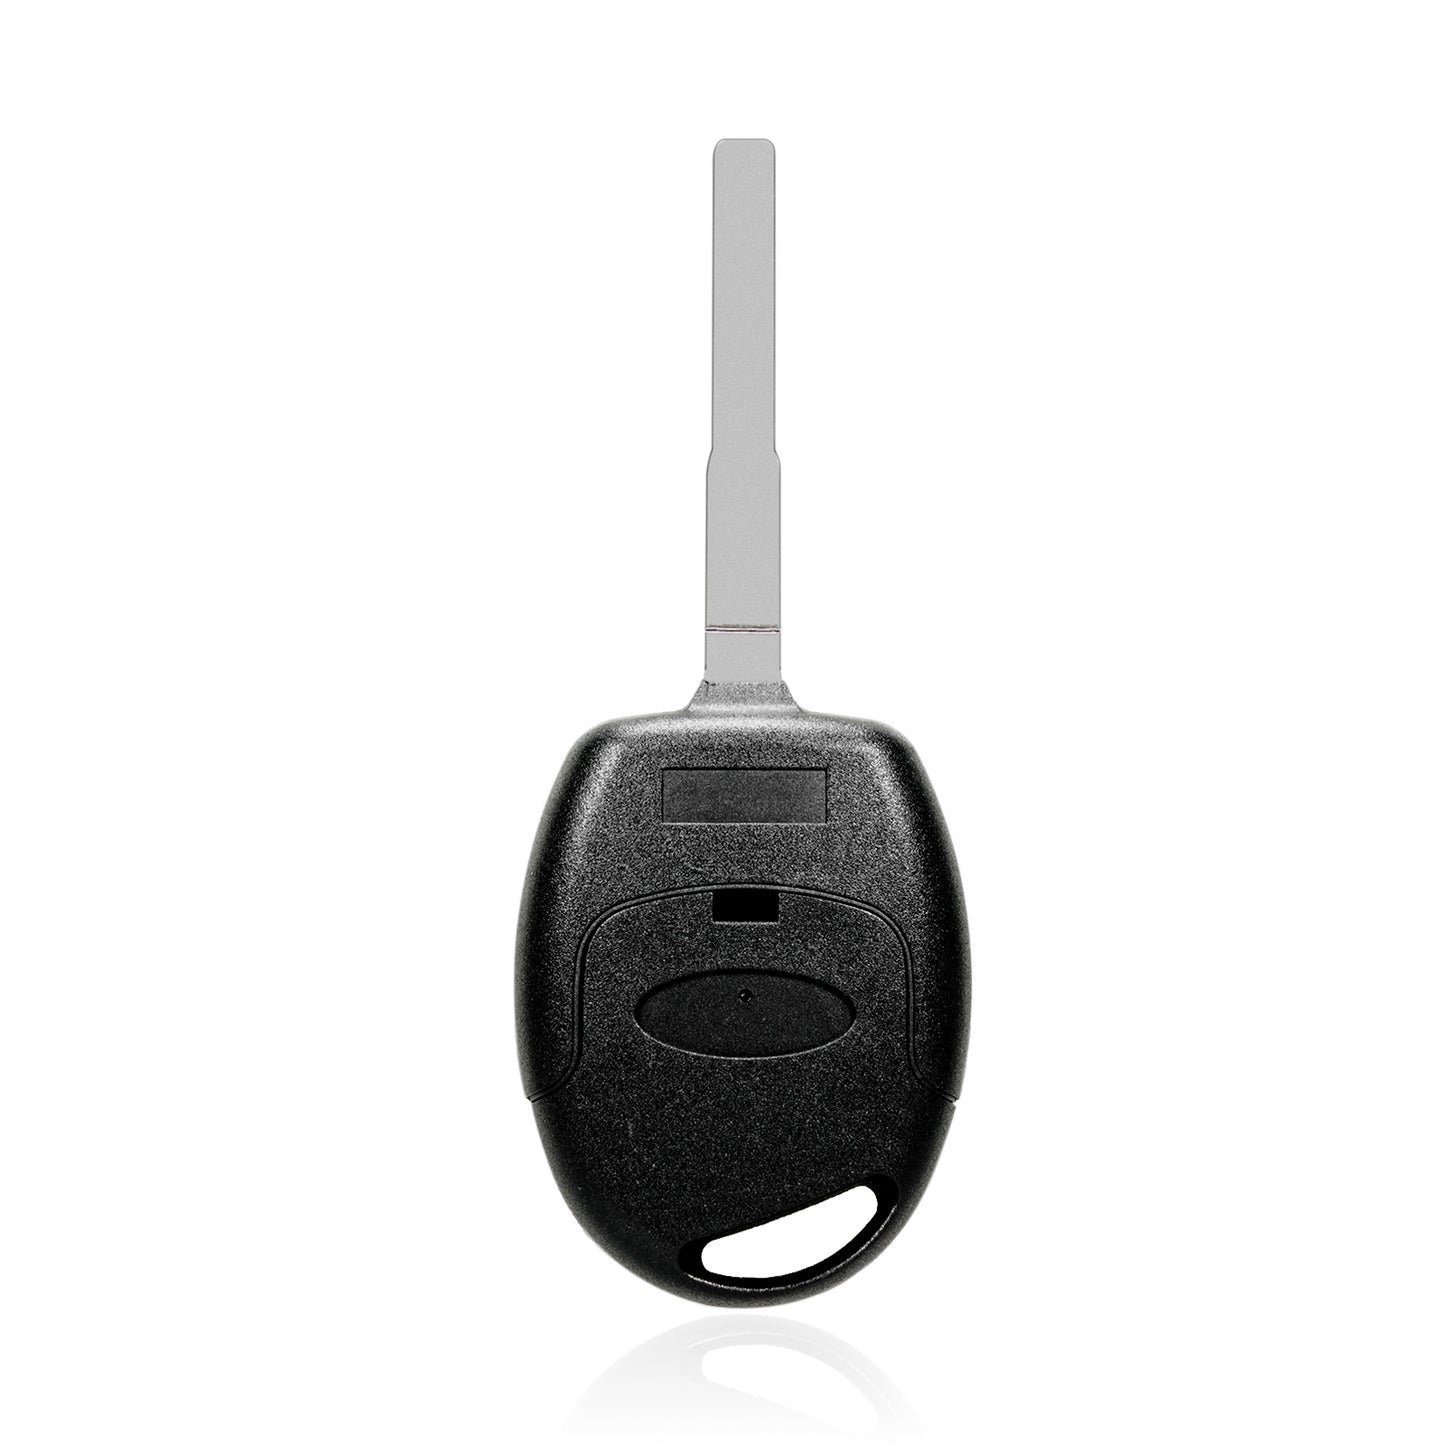 3 Buttons 315MHz Keyless Entry Fob Remote Car Key For 2011 - 2017 Ford Fiesta FCC ID:KR55WK47899 SKU : J732